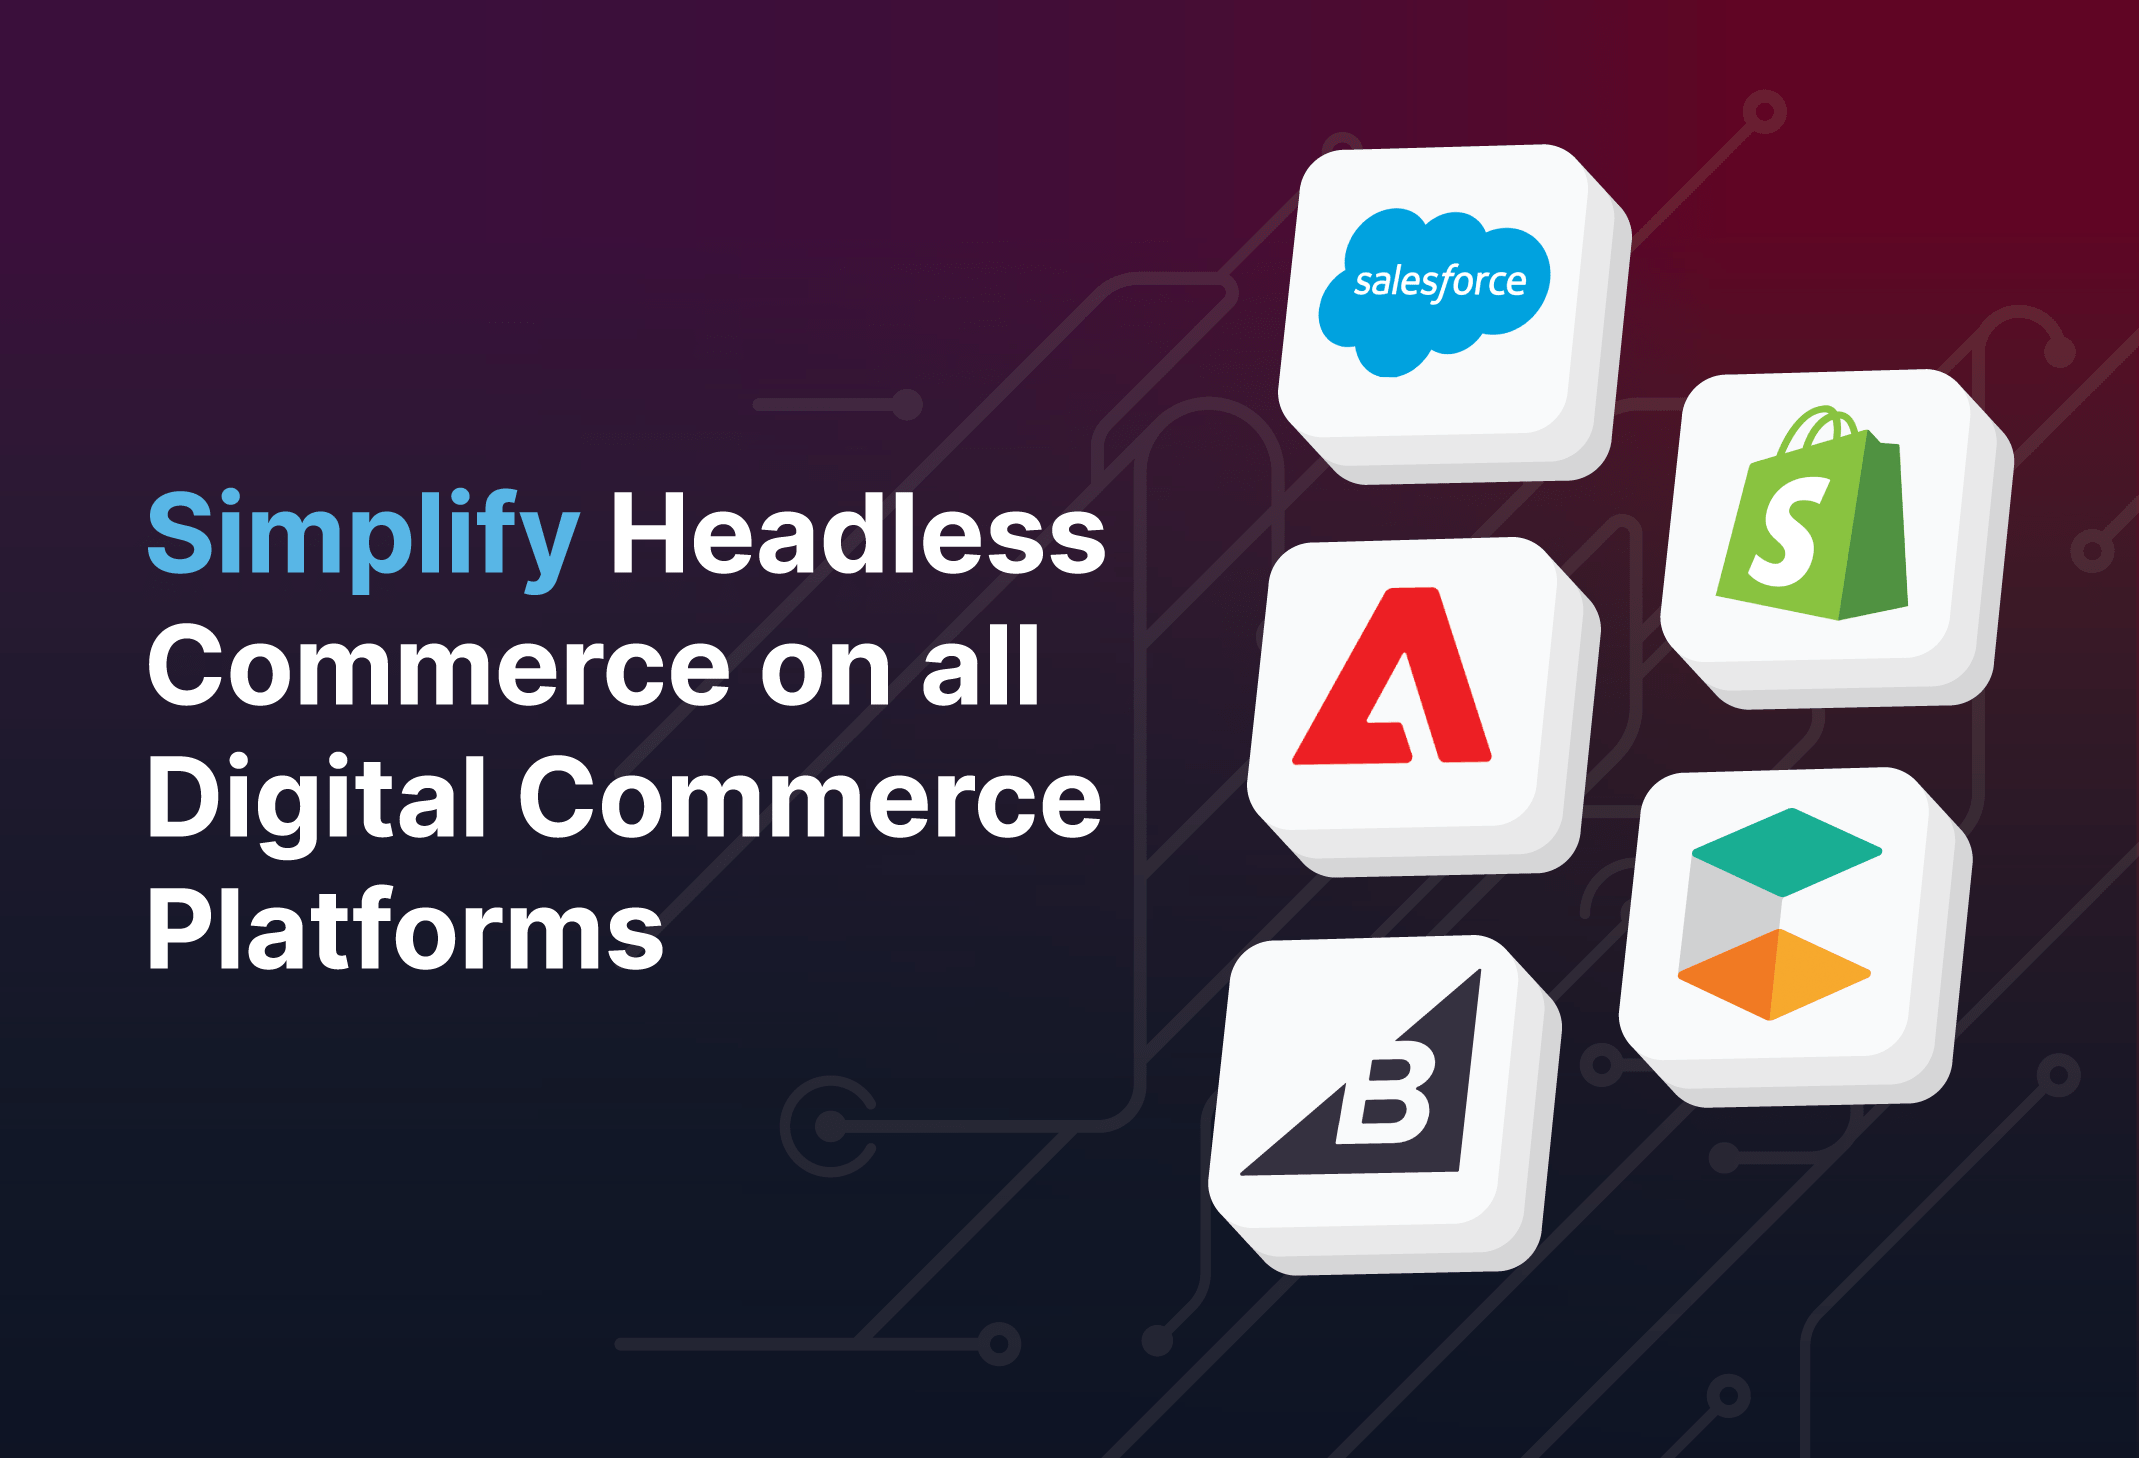  Simplify headless commerce on all digital commerce platforms 